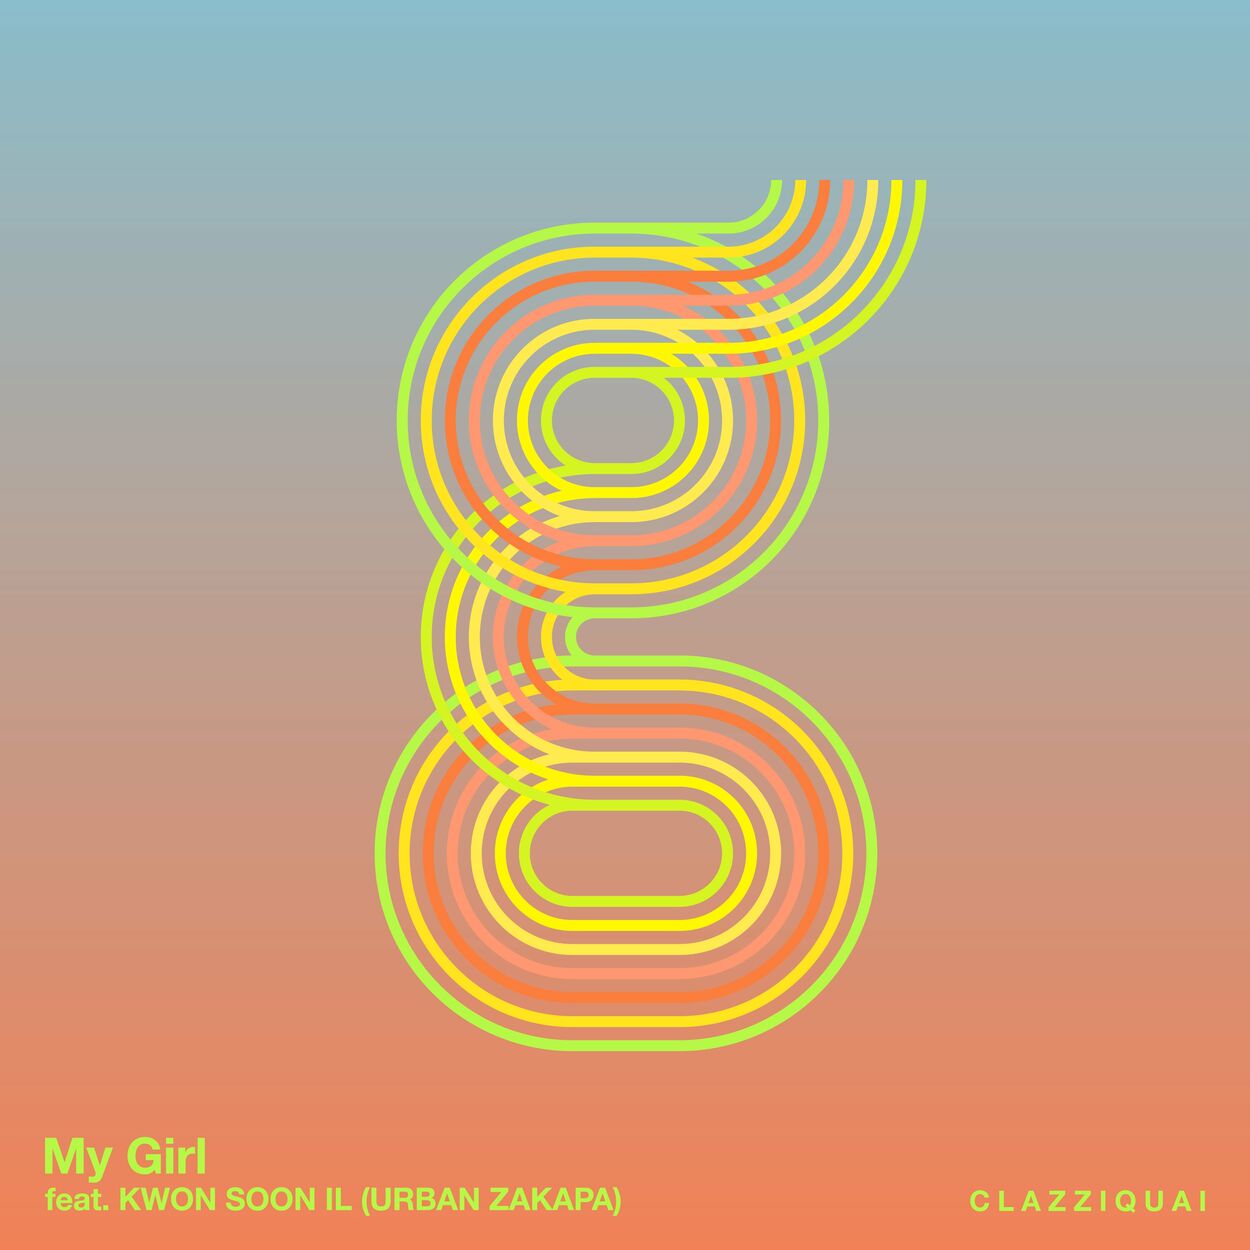 Clazziquai – My Girl (feat. KWON SOON IL (Urban Zakapa)) – Single